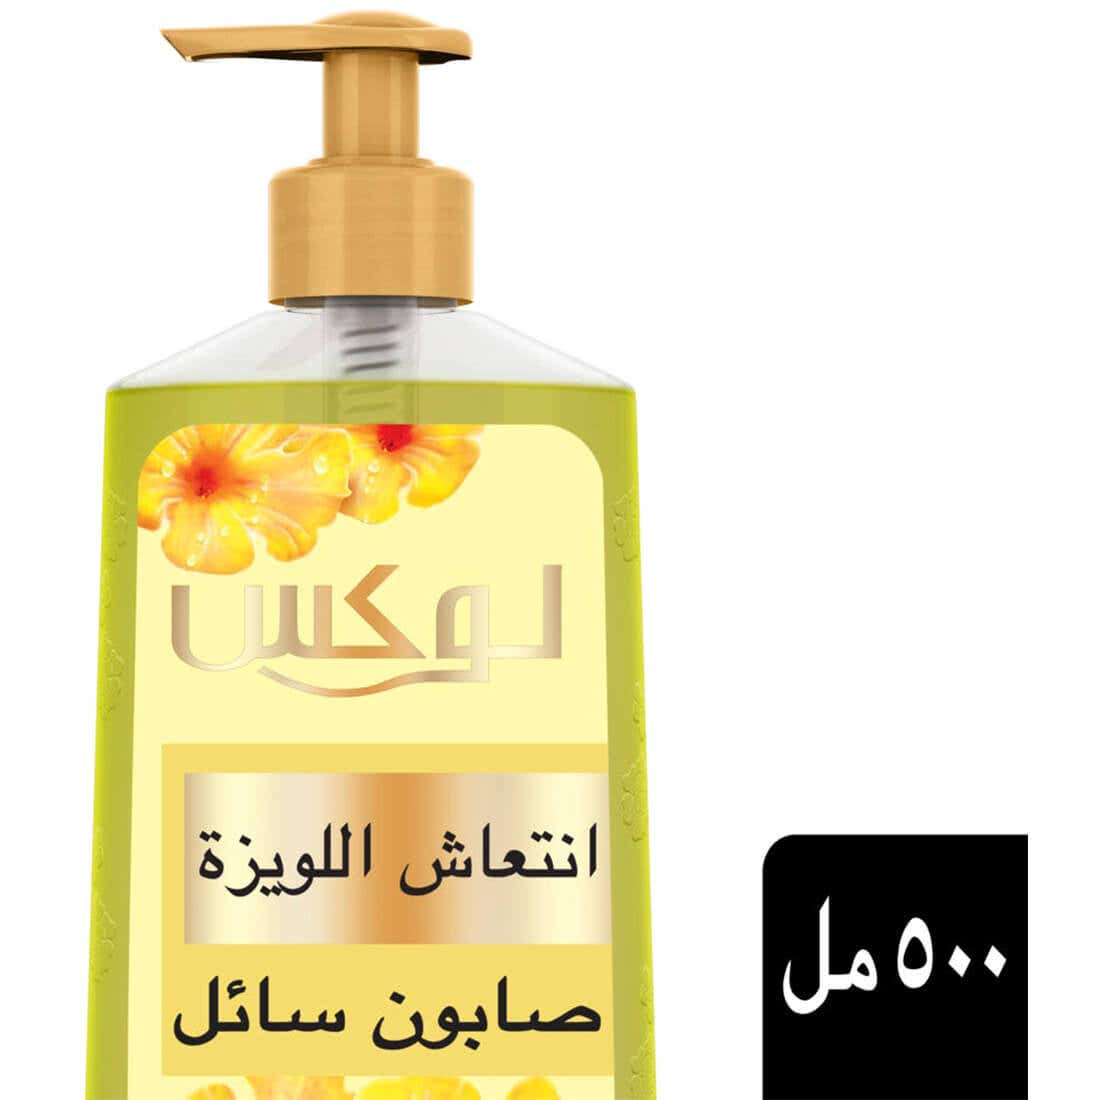 Lux Hand Wash Refreshing Verbena 500ml